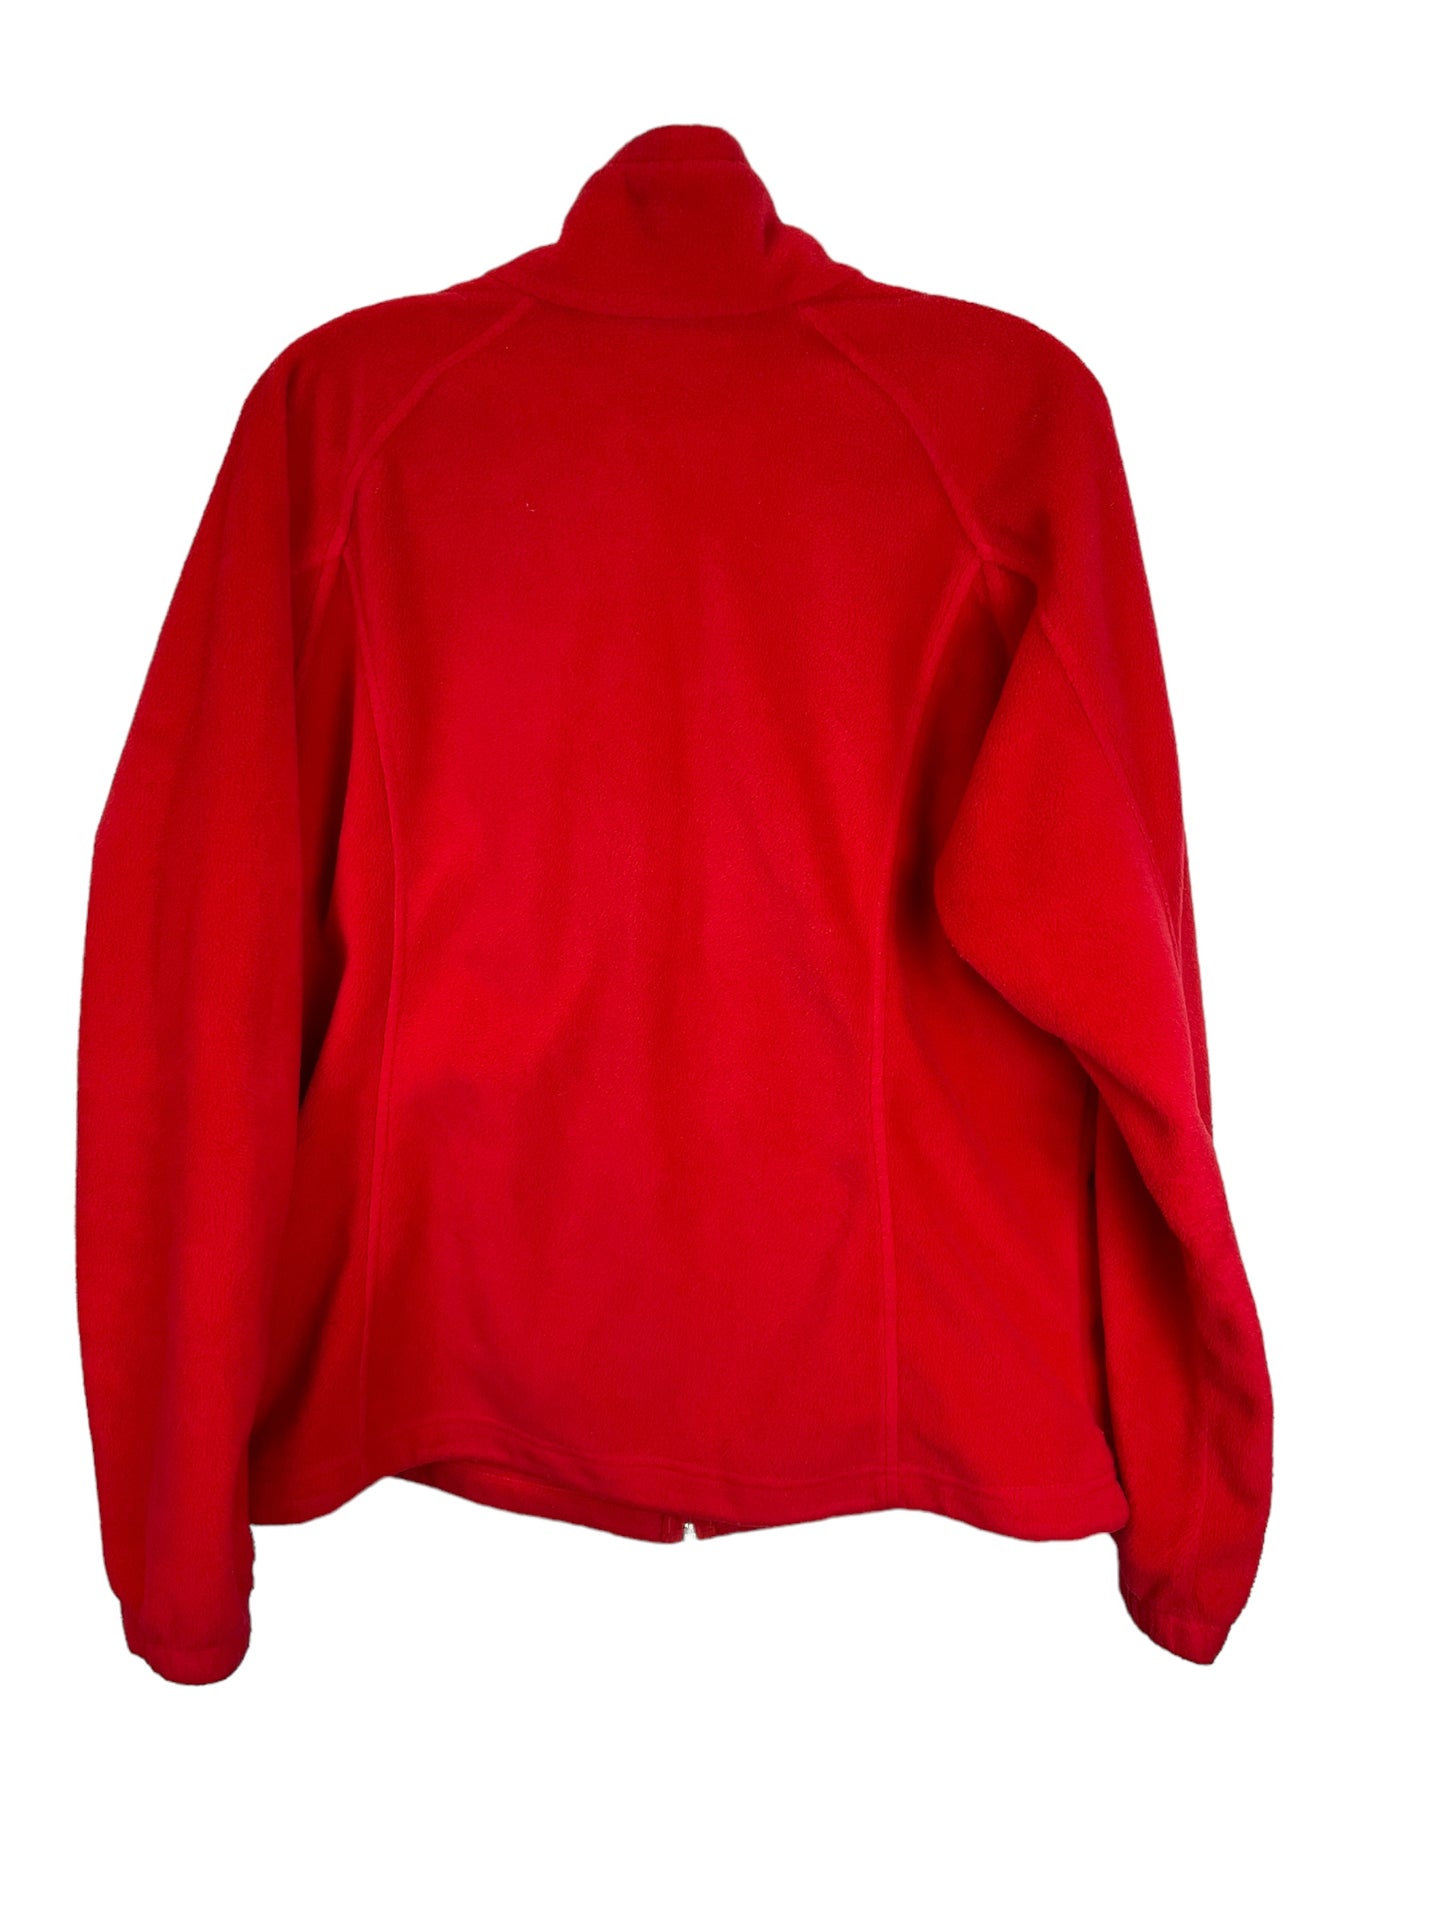 Jacket Fleece By Columbia  Size: Xl